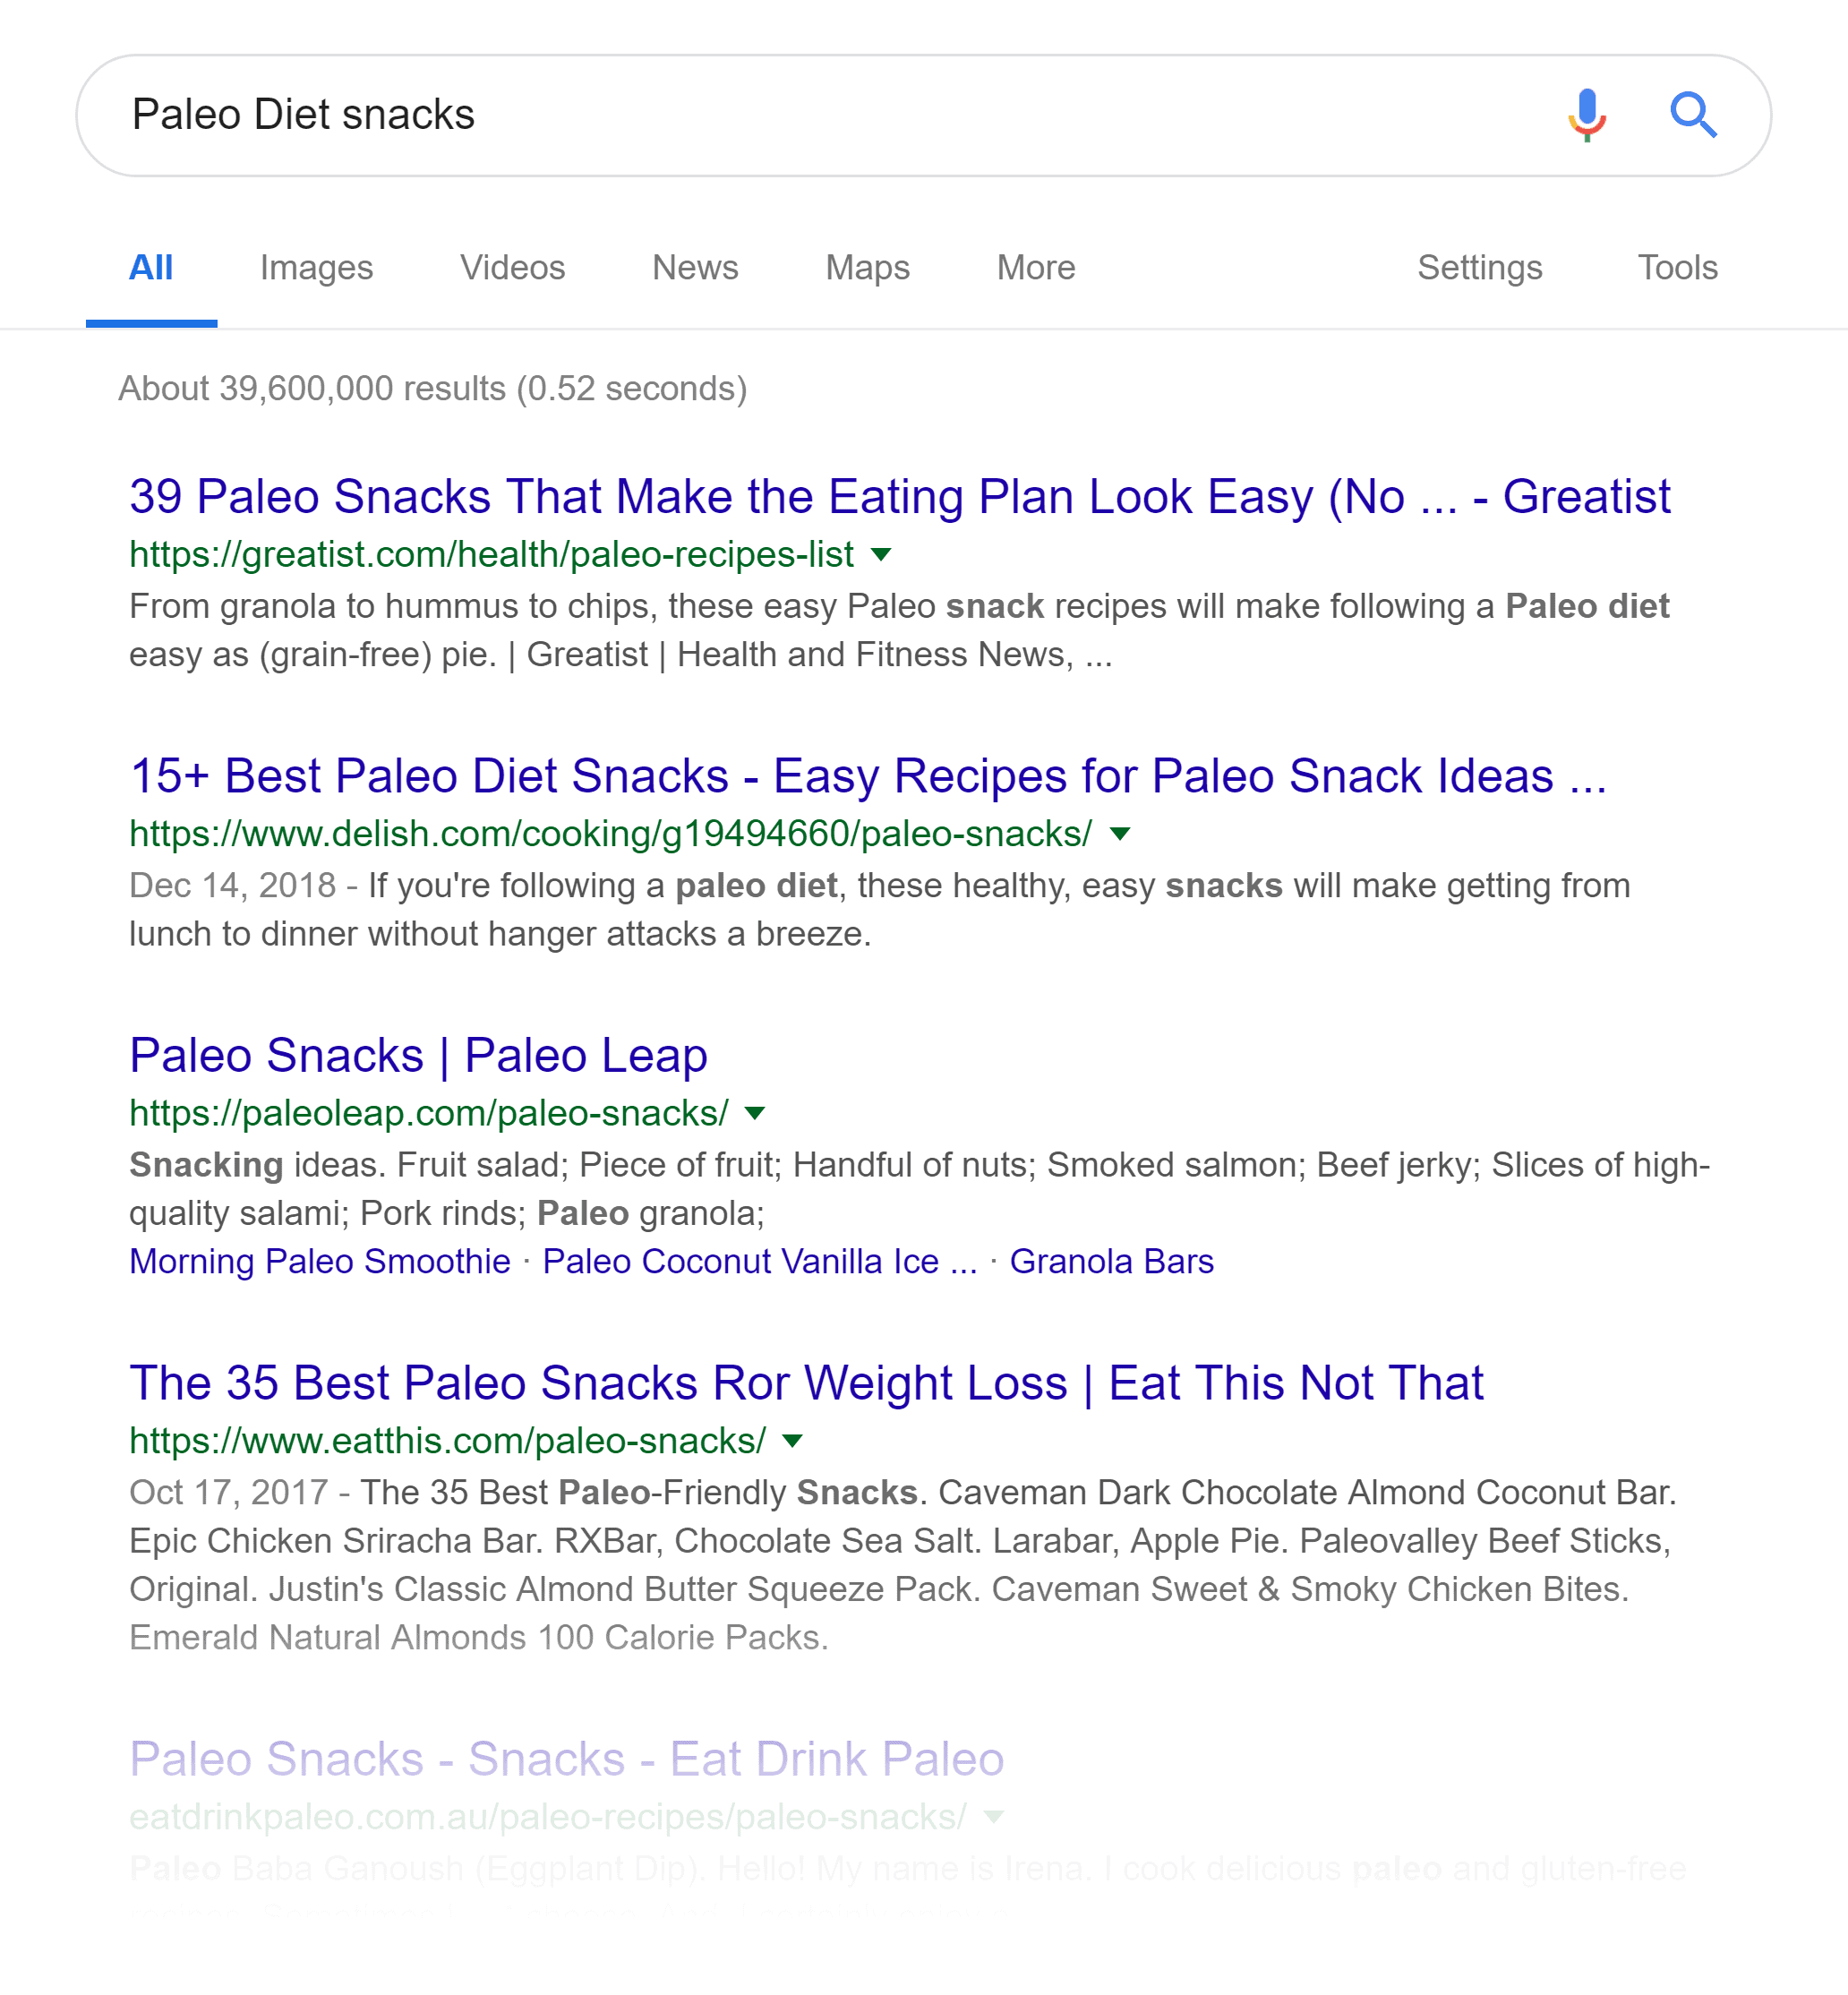 Google search for "Paleo Diet snacks"